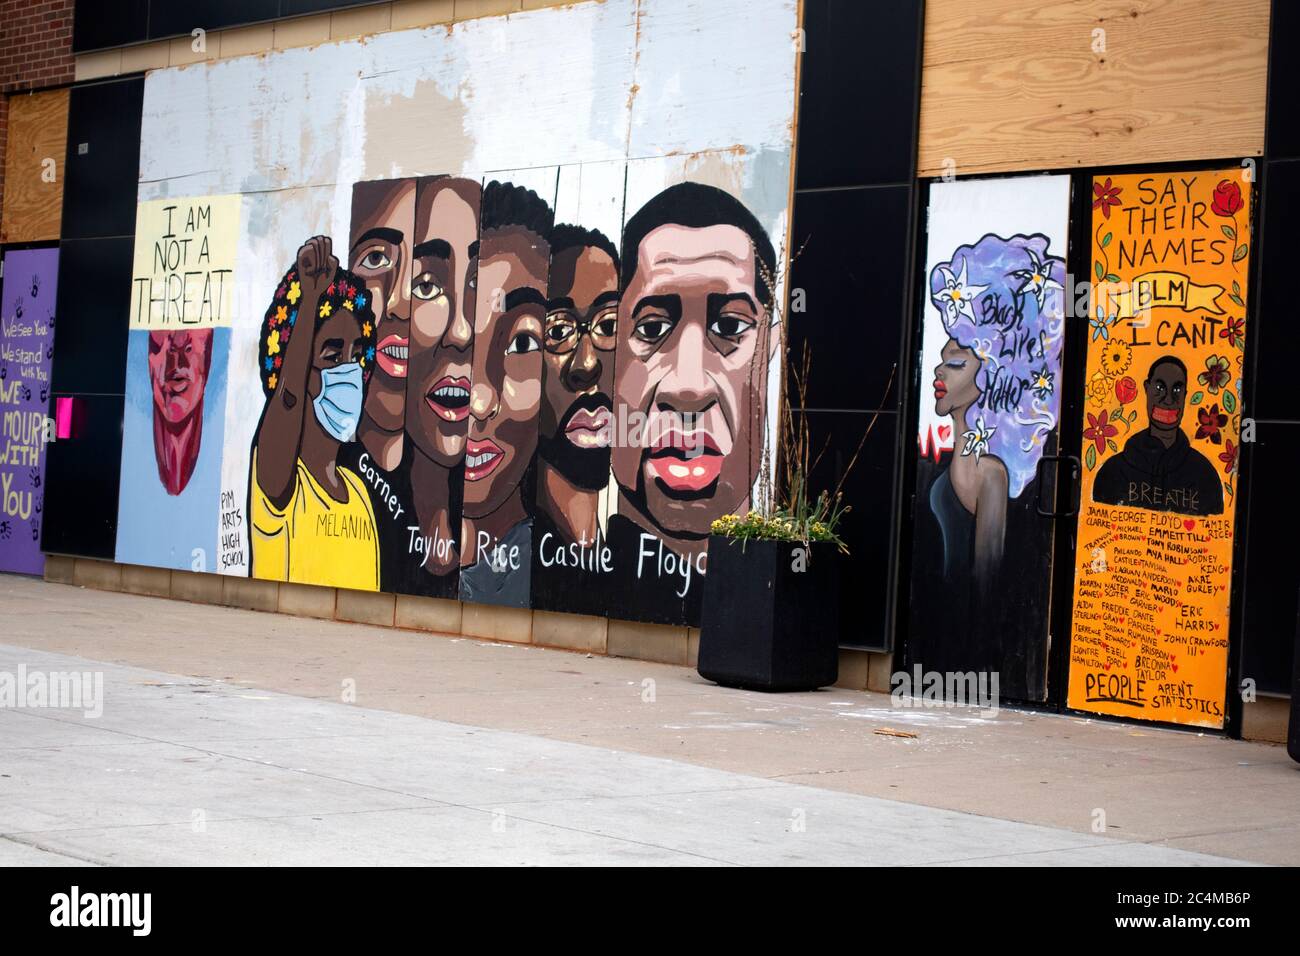 Portraits black people killed by police 'Melanin Garner Taylor Rice Castile Floyd' on plywood after George Floyd death. Minneapolis Minnesota MN USA Stock Photo